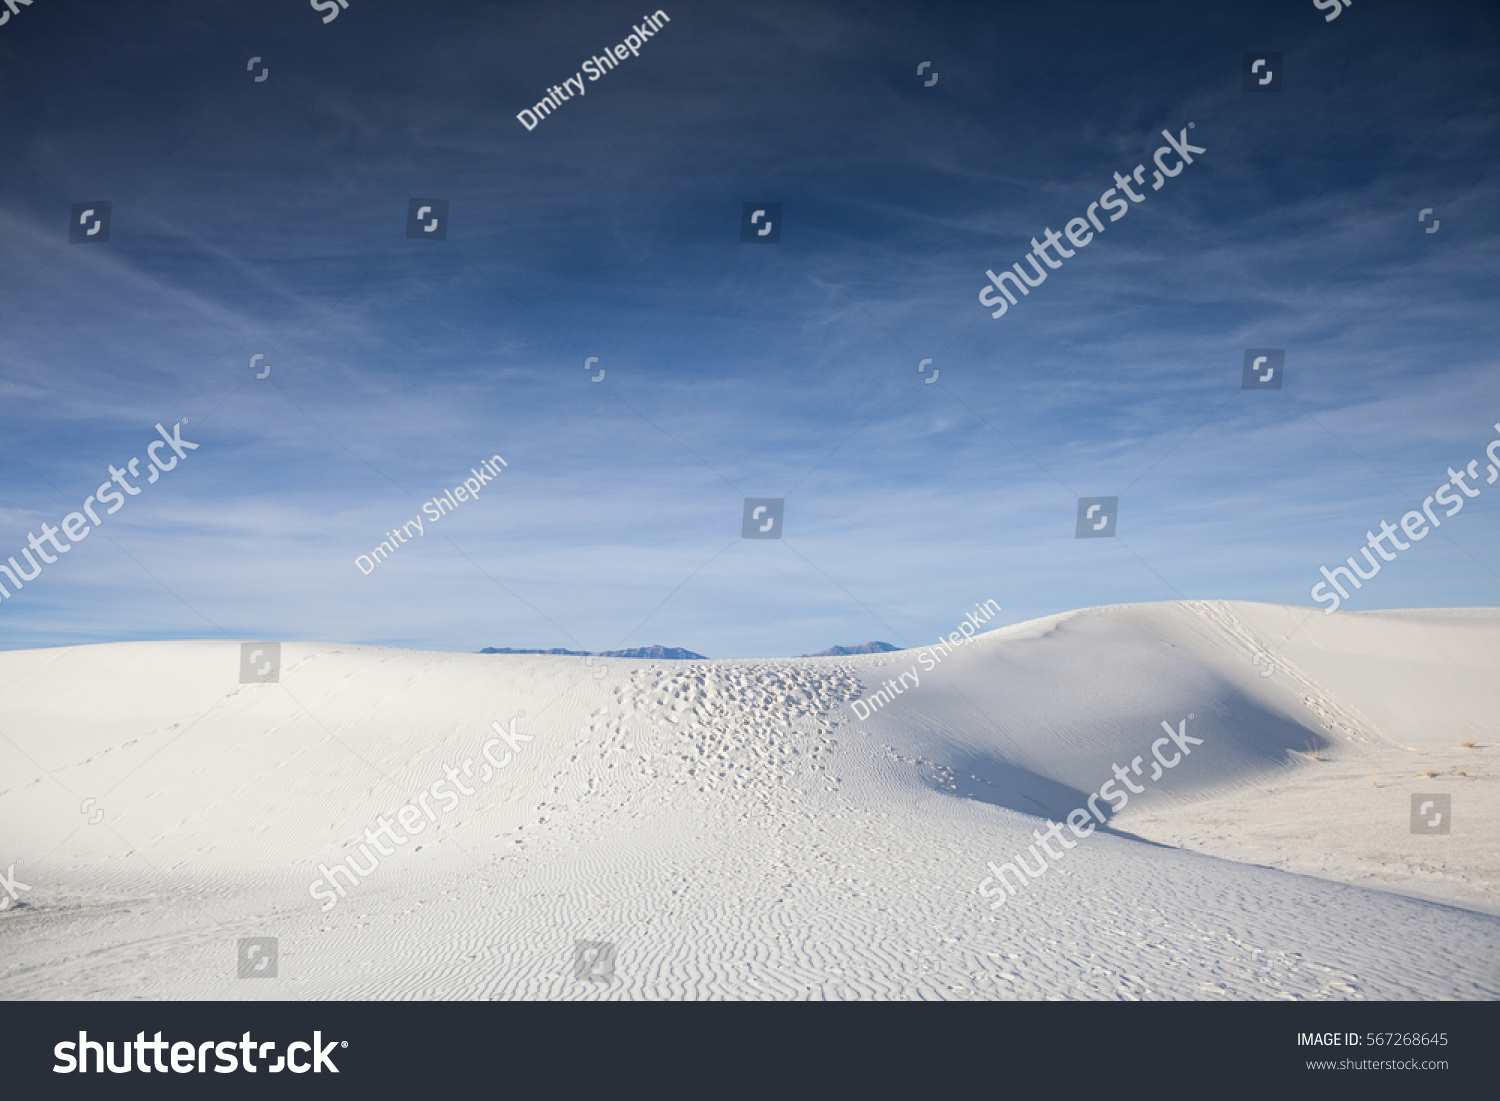 stock-photo-white-sands-national-monument-usa-567268645.jpg